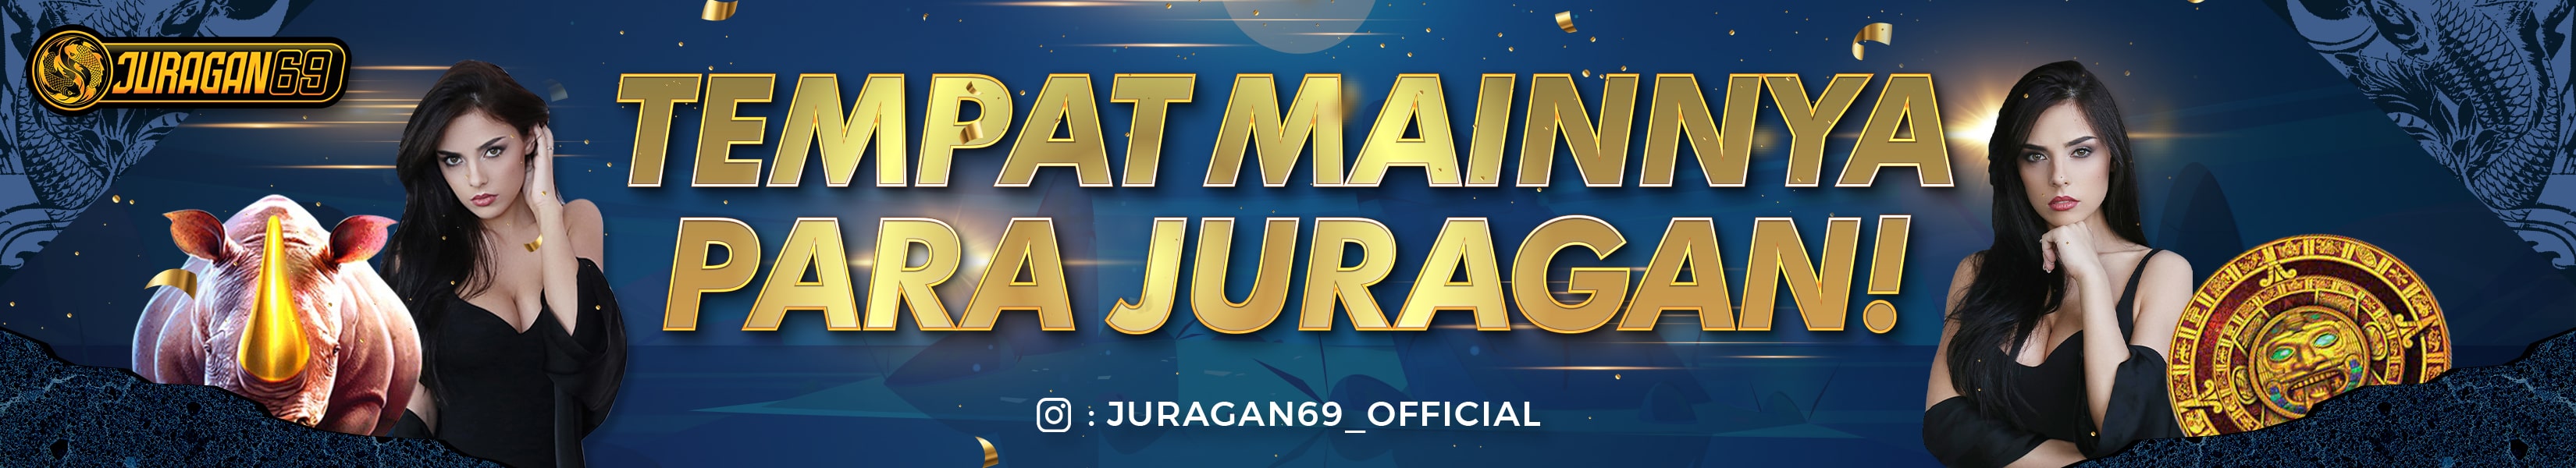 Welcome to Juragan